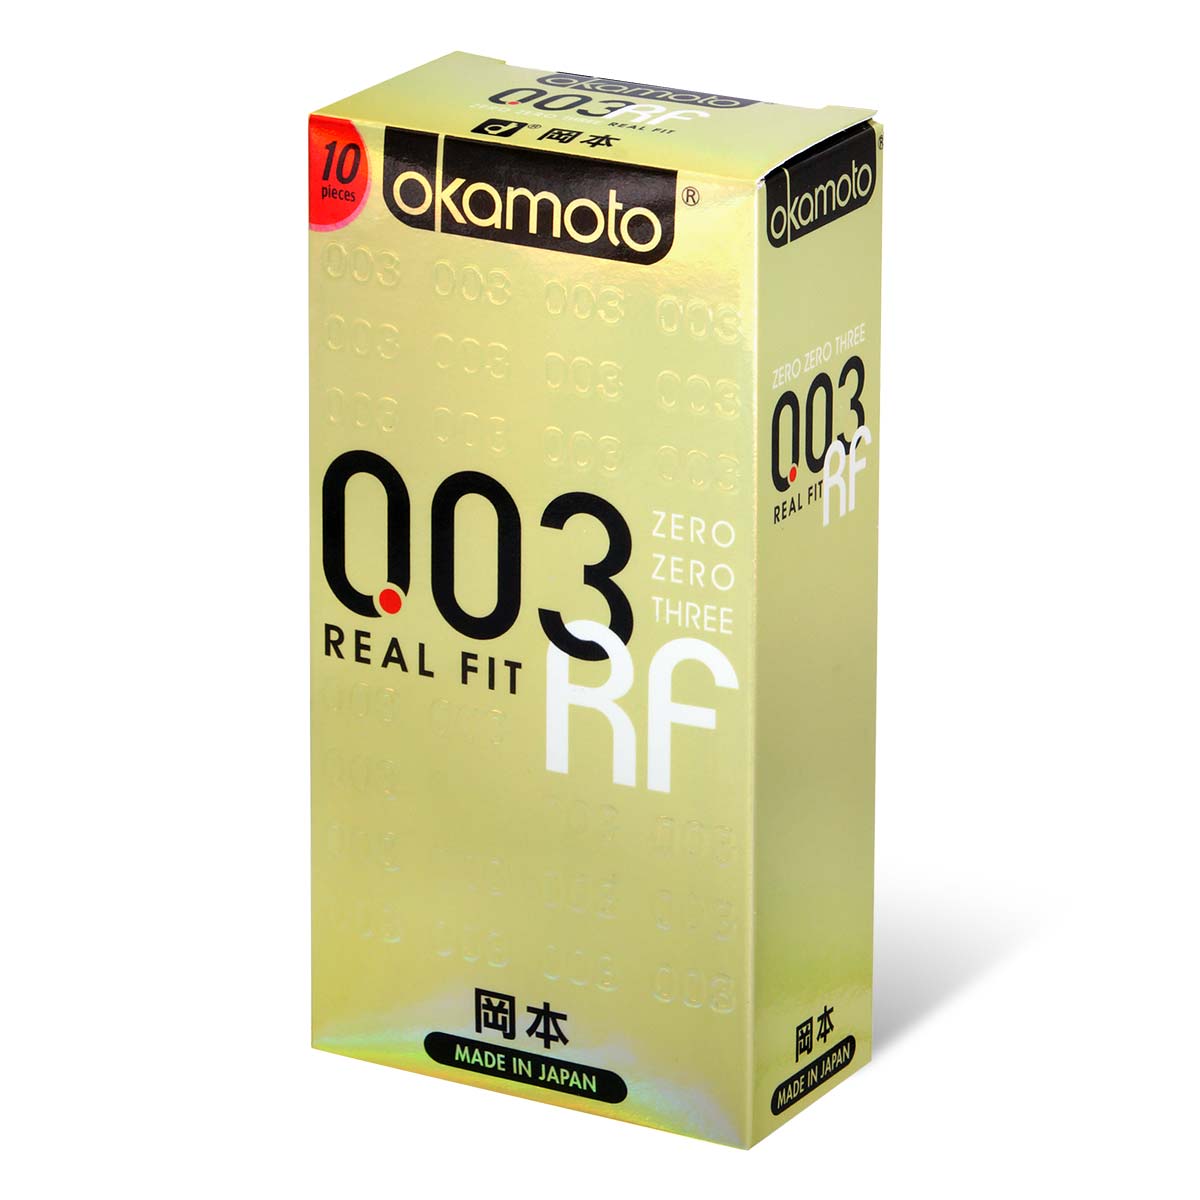 Okamoto 0.03 Real Fit 10's Pack Latex Condom-p_1